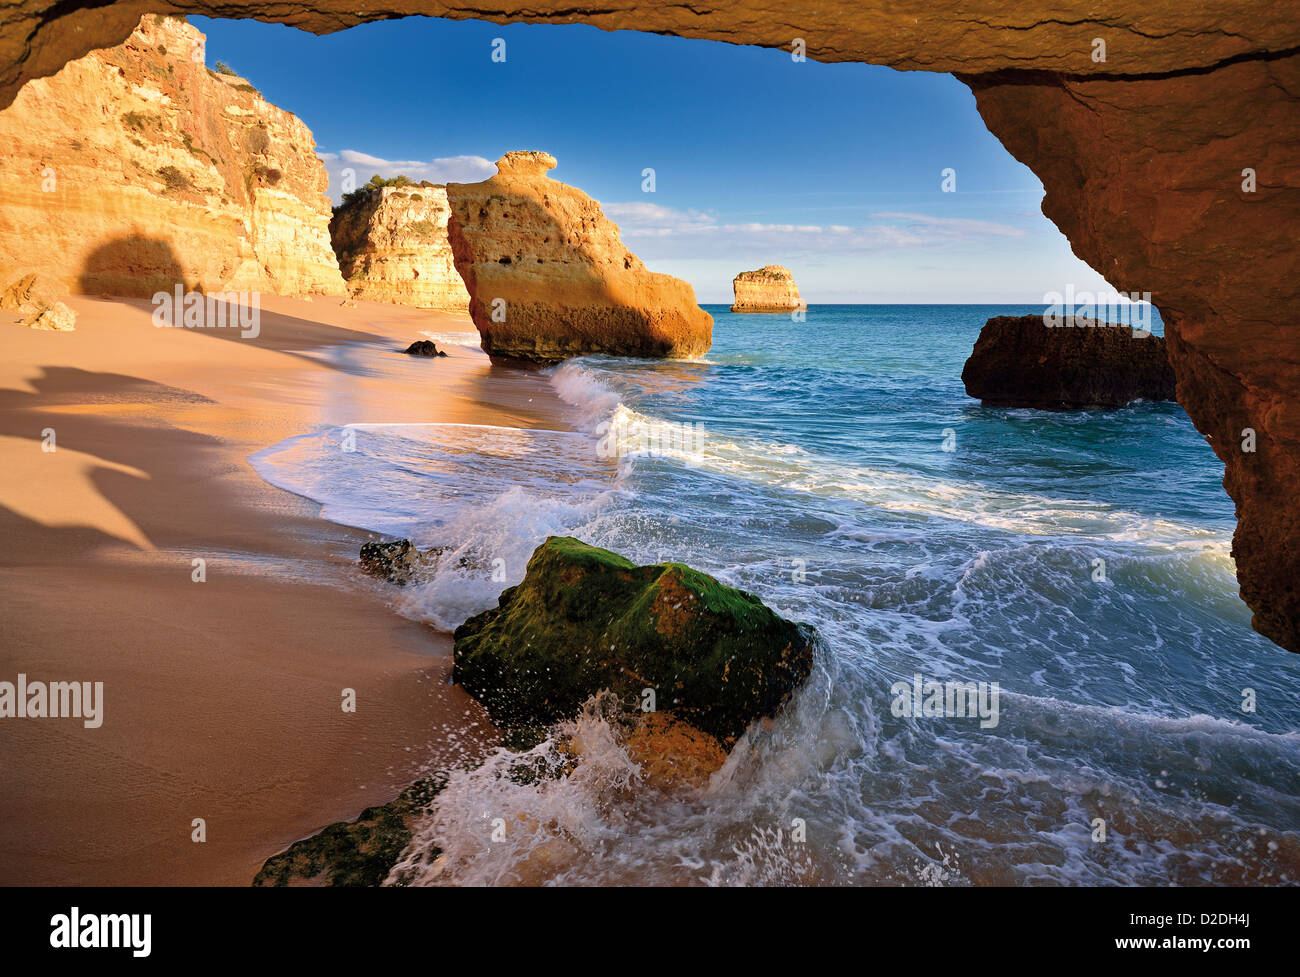 Le Portugal, l'Algarve : Cave vue de plage de Praia da Marinha près de Benagil Banque D'Images